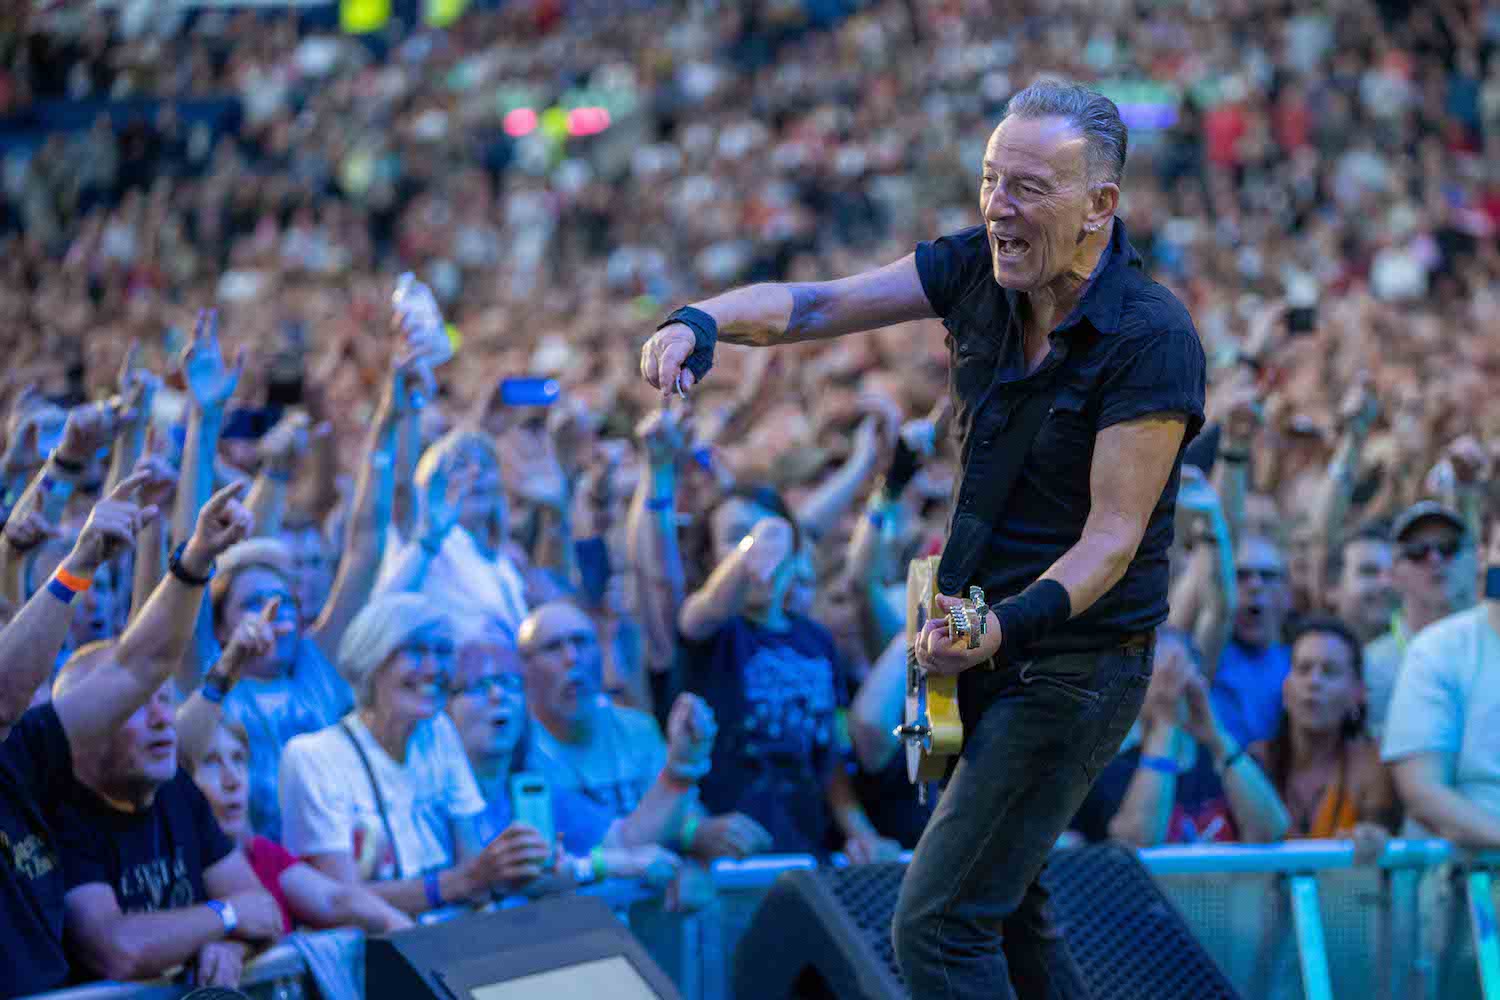 Bruce Springsteen & E Street Band at BT Murrayfield Stadium, Edinburgh, Scotland on May 30, 2023.